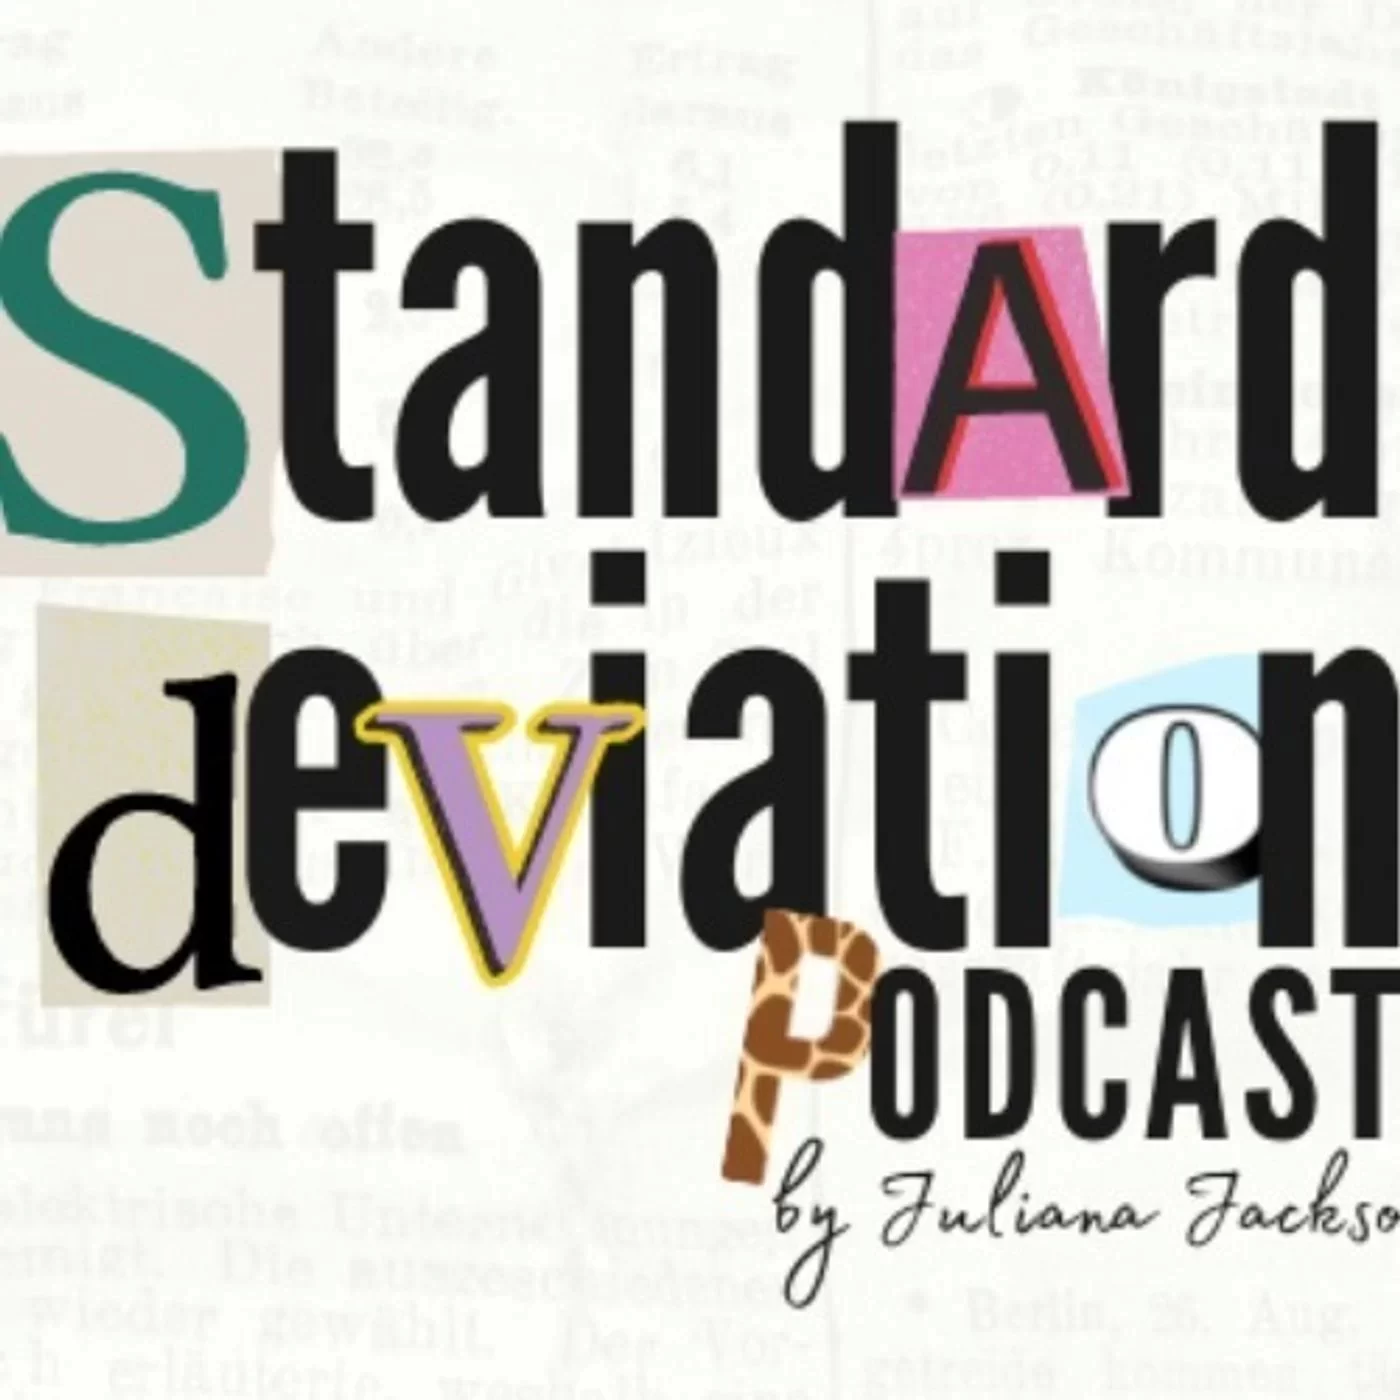 Standard Deviation: A podcast from Juliana Jackson